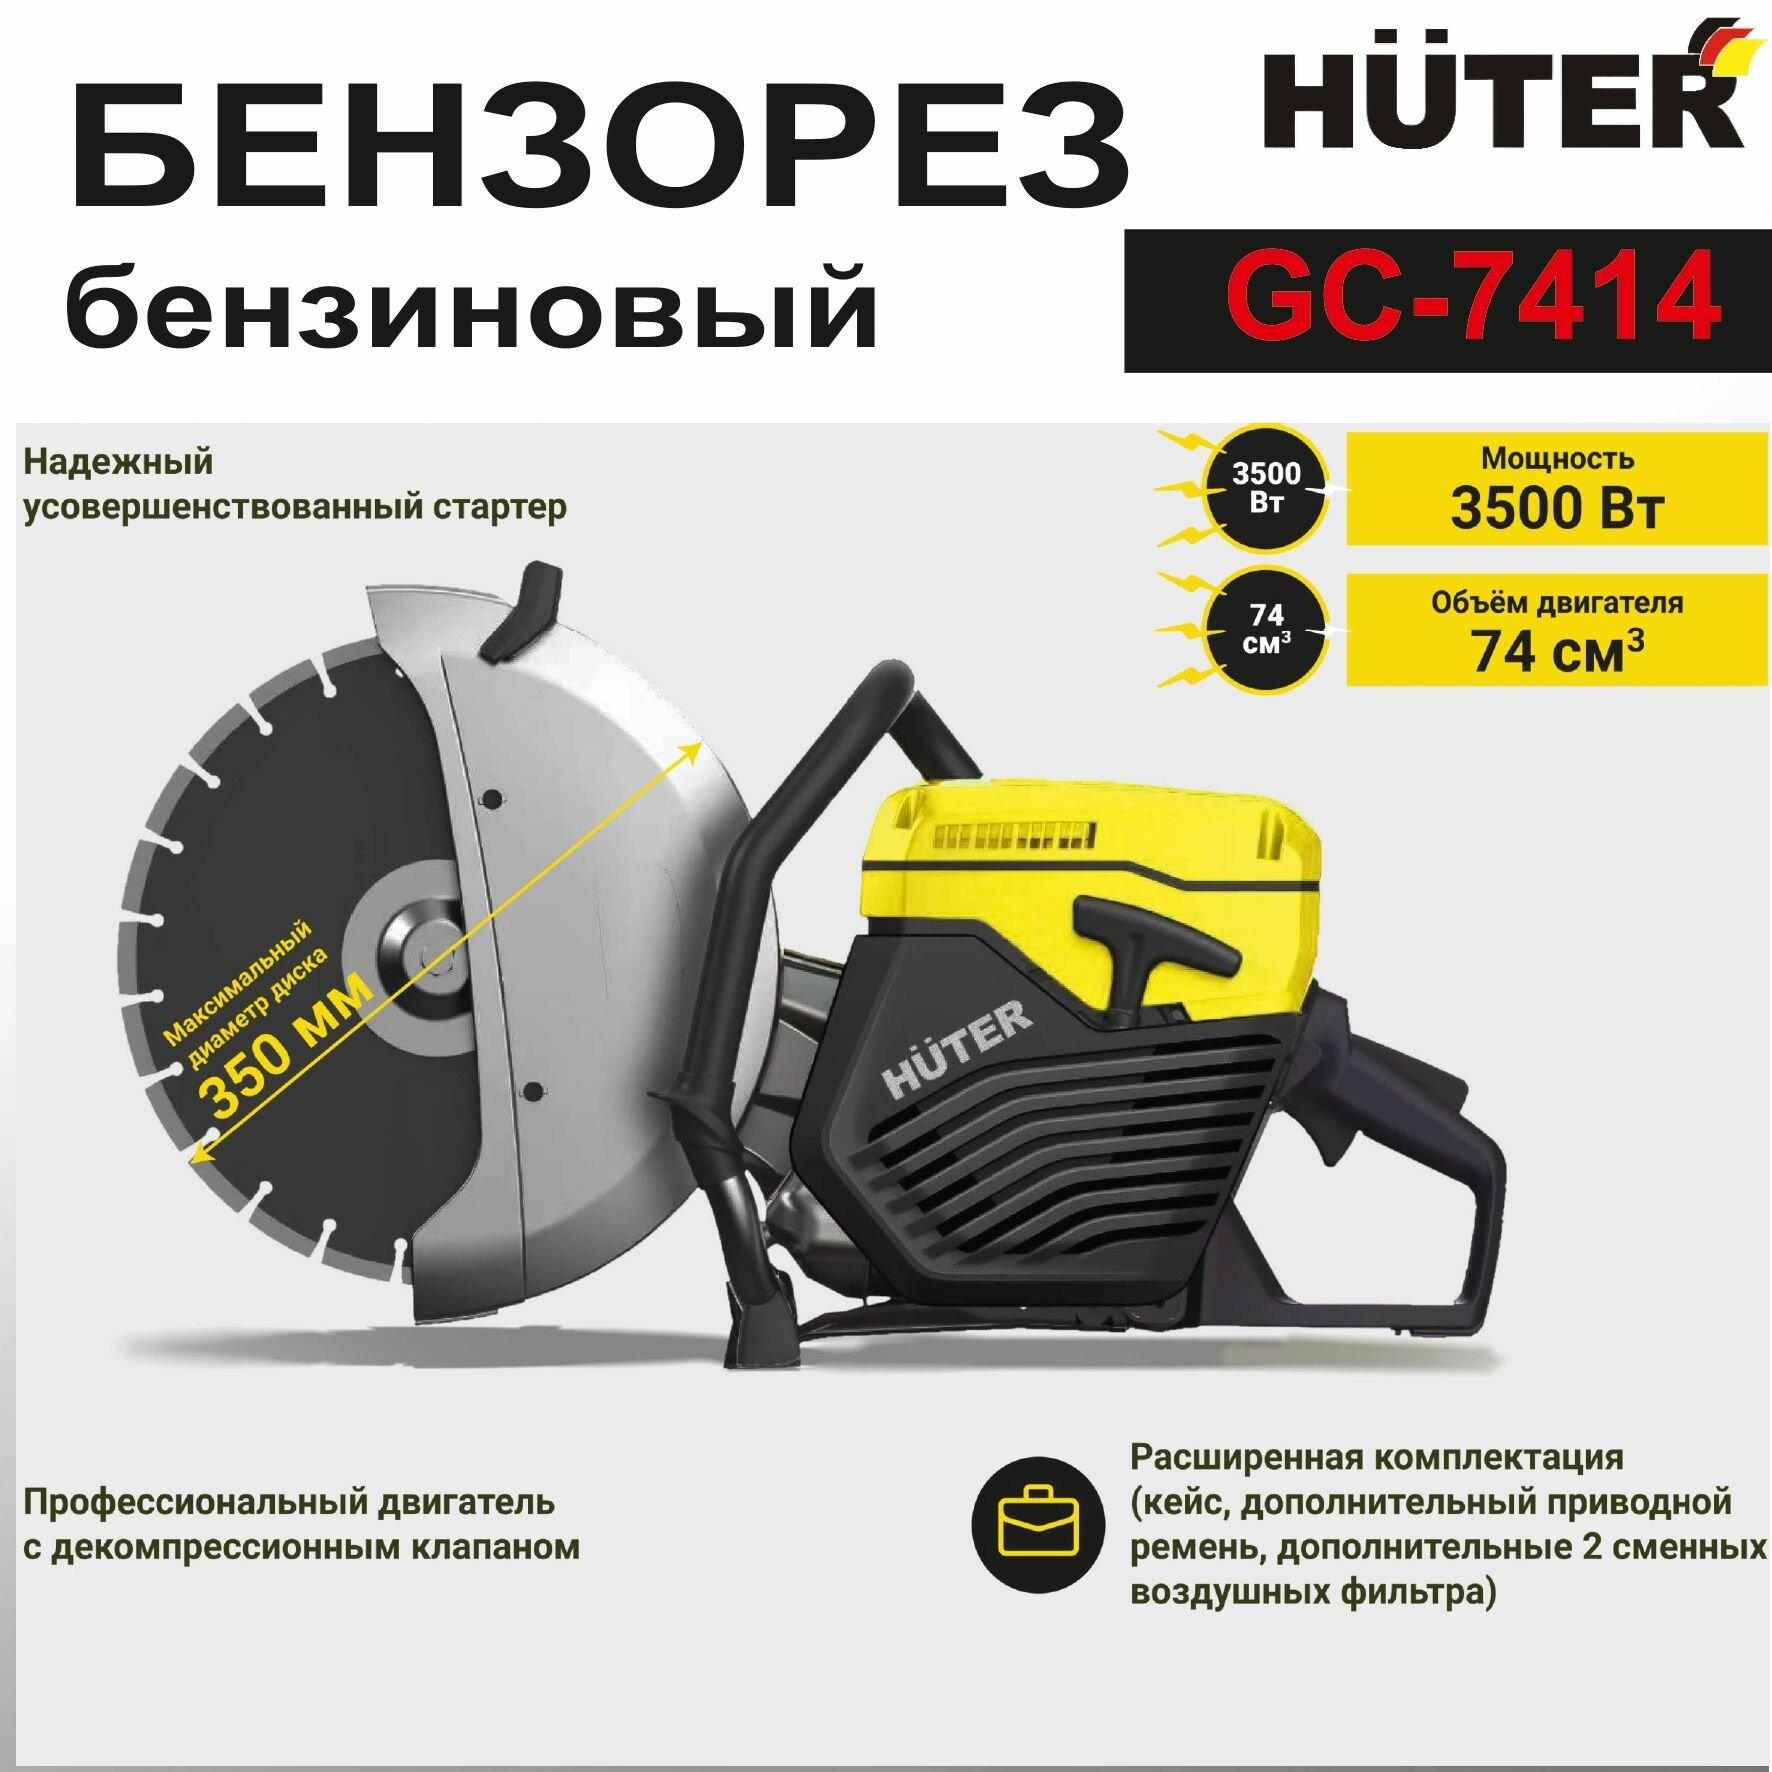 Бензорез GC-7414 Huter бензиновый